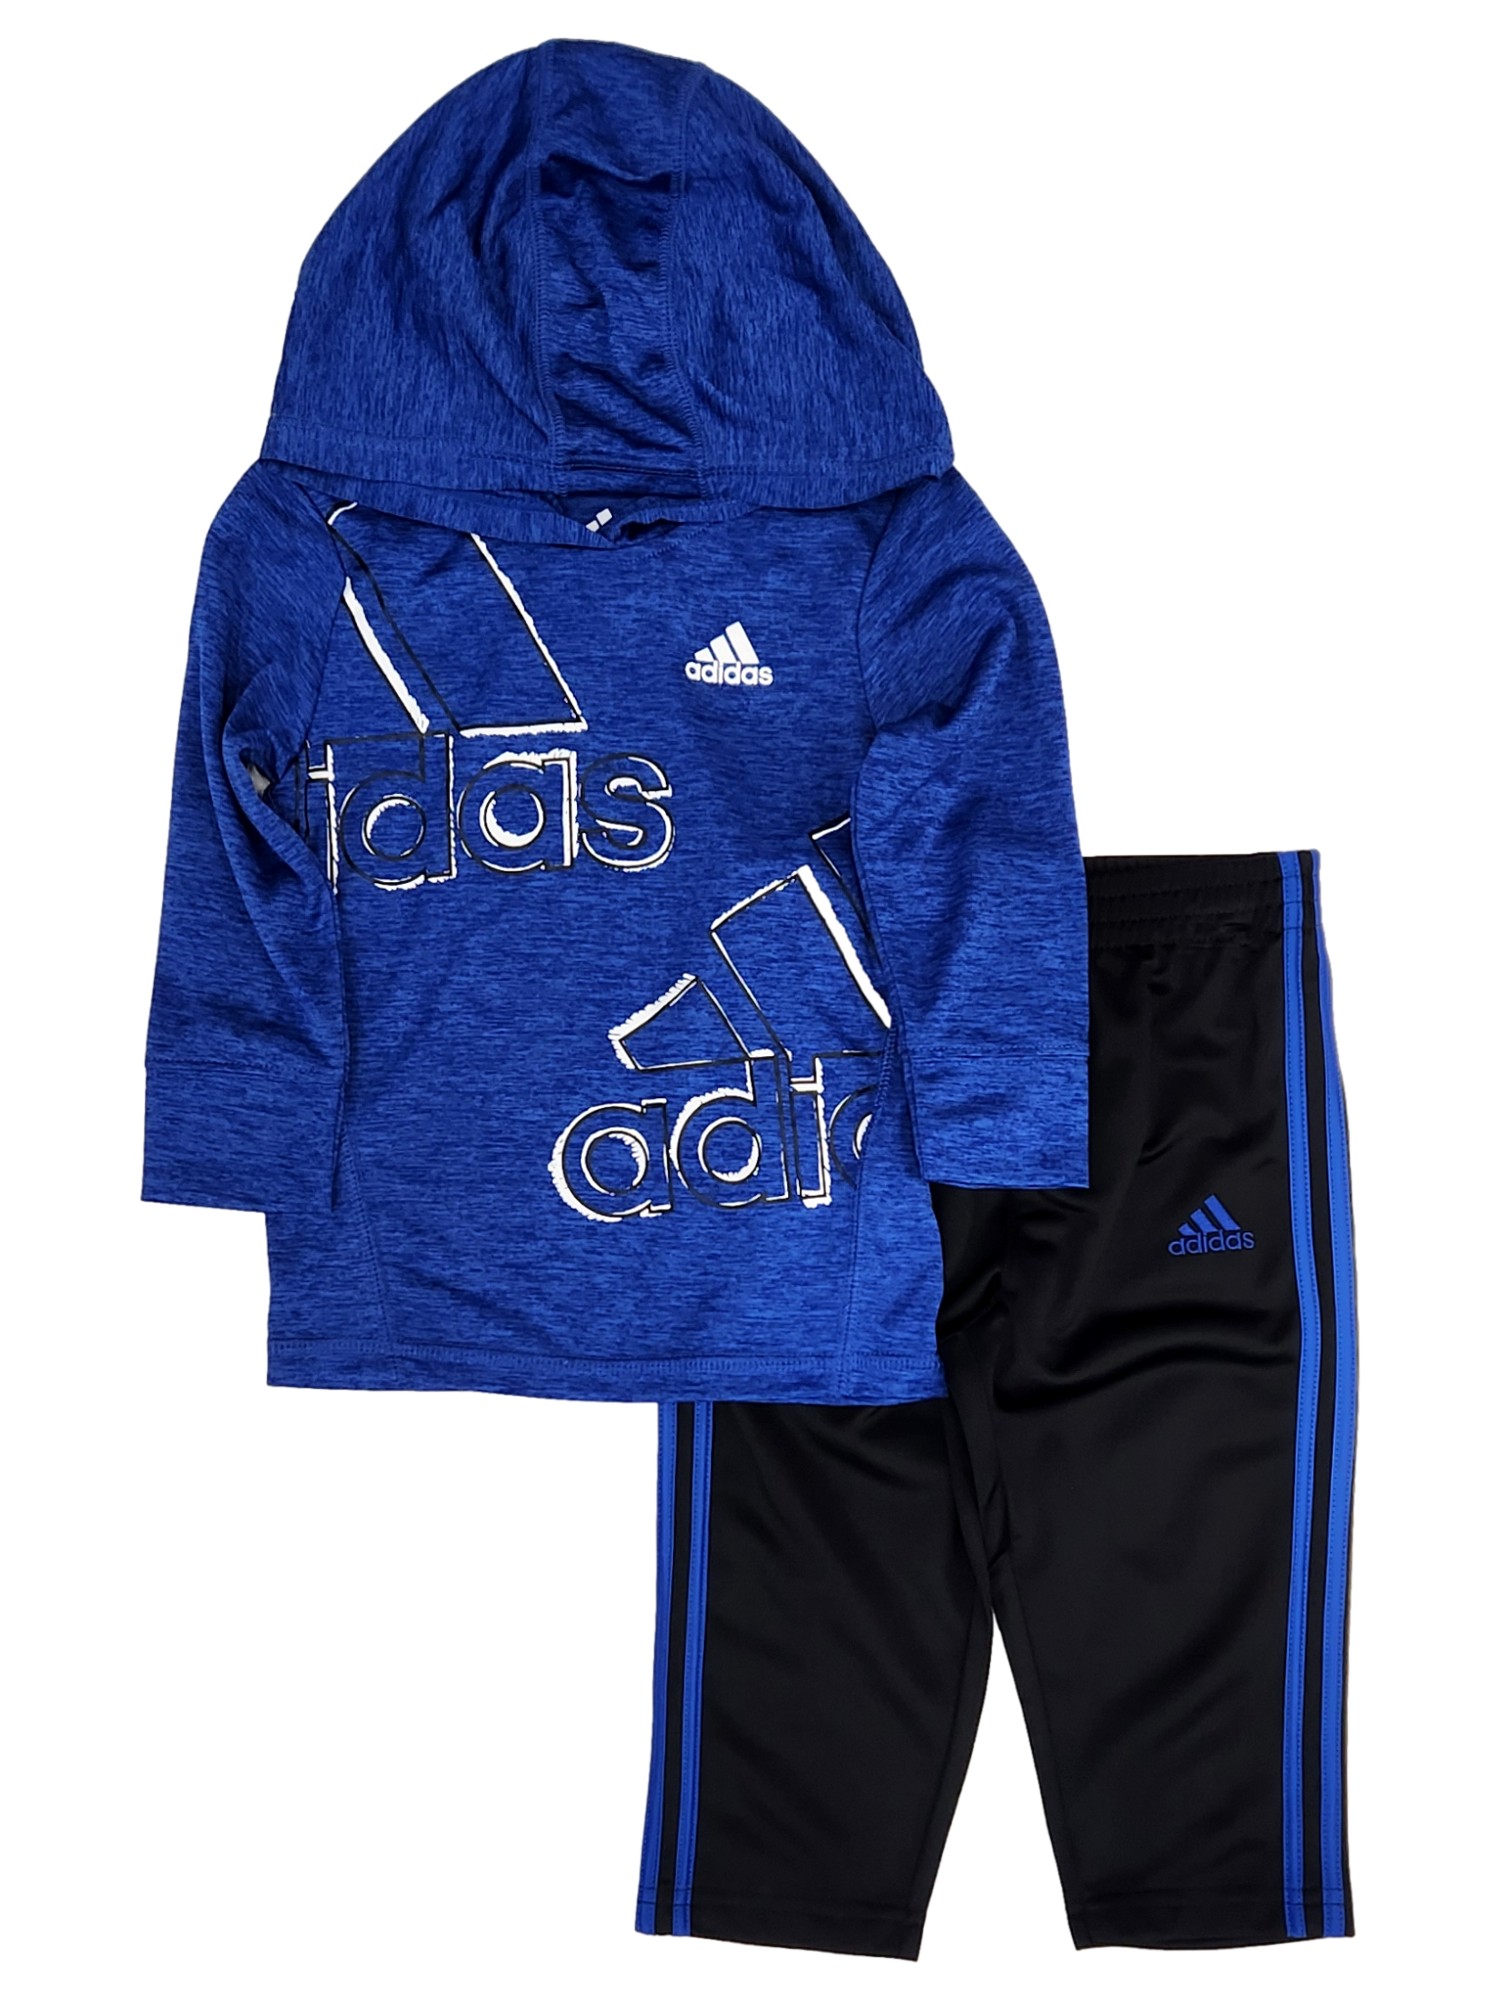 Adidas Infant Boys Blue Logo Hooded Shirt & Pant Tracksuit Outfit Set 12M